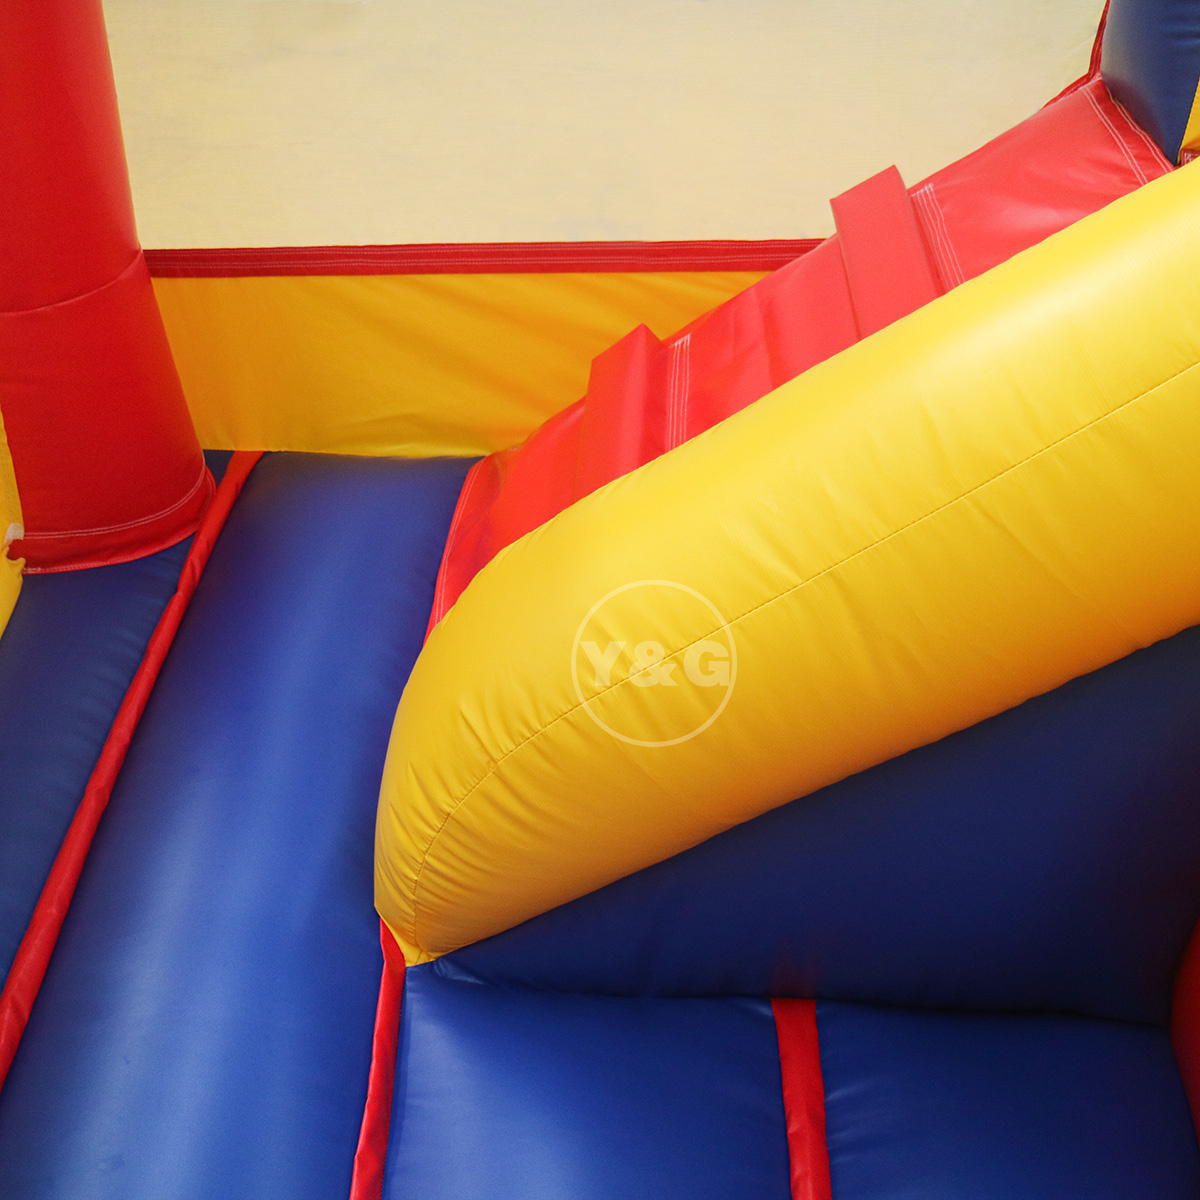 Kids bounce house water slide for saleYG-95